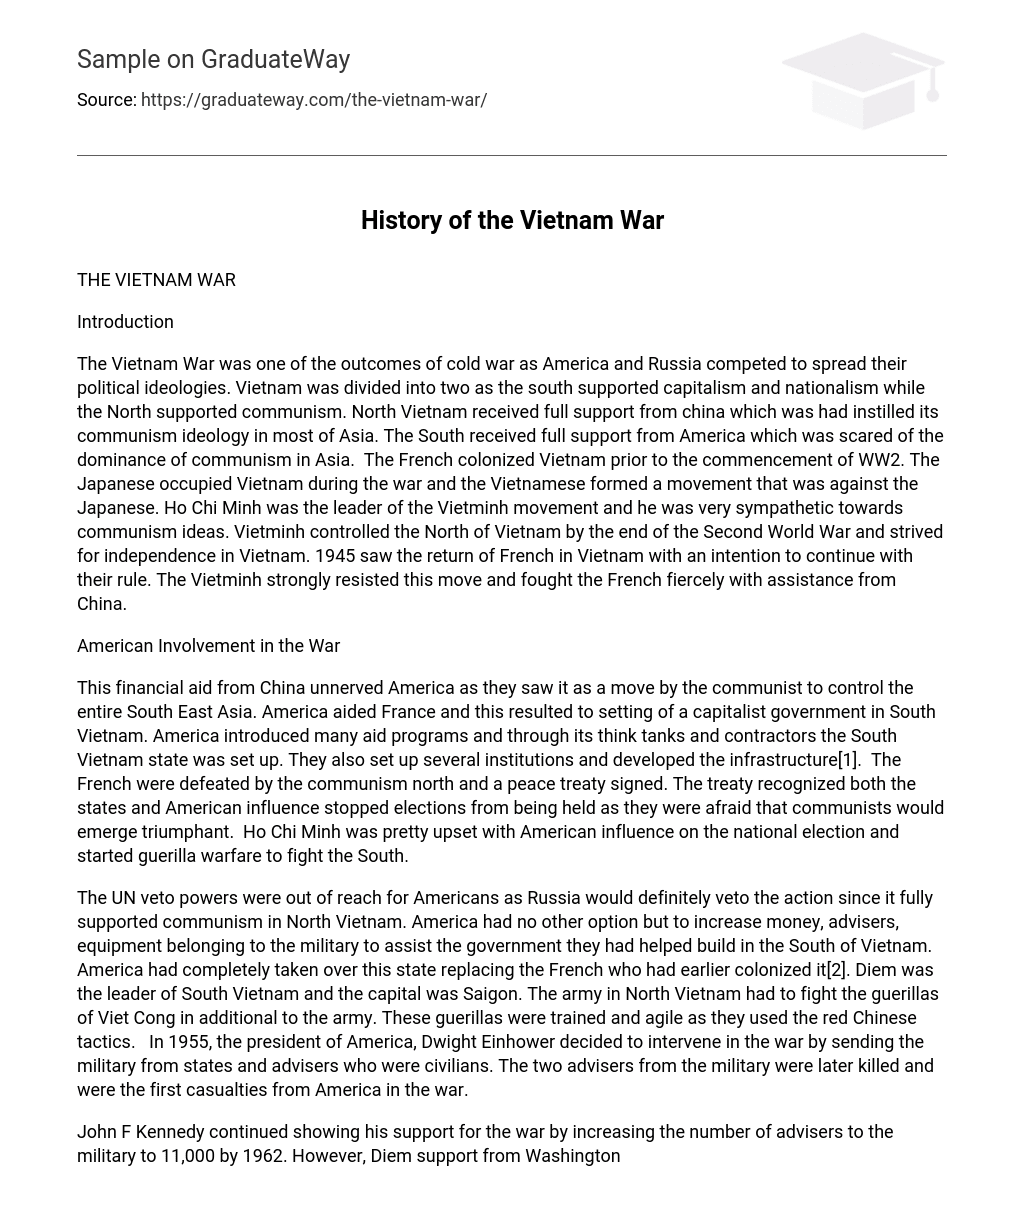 History of the Vietnam War